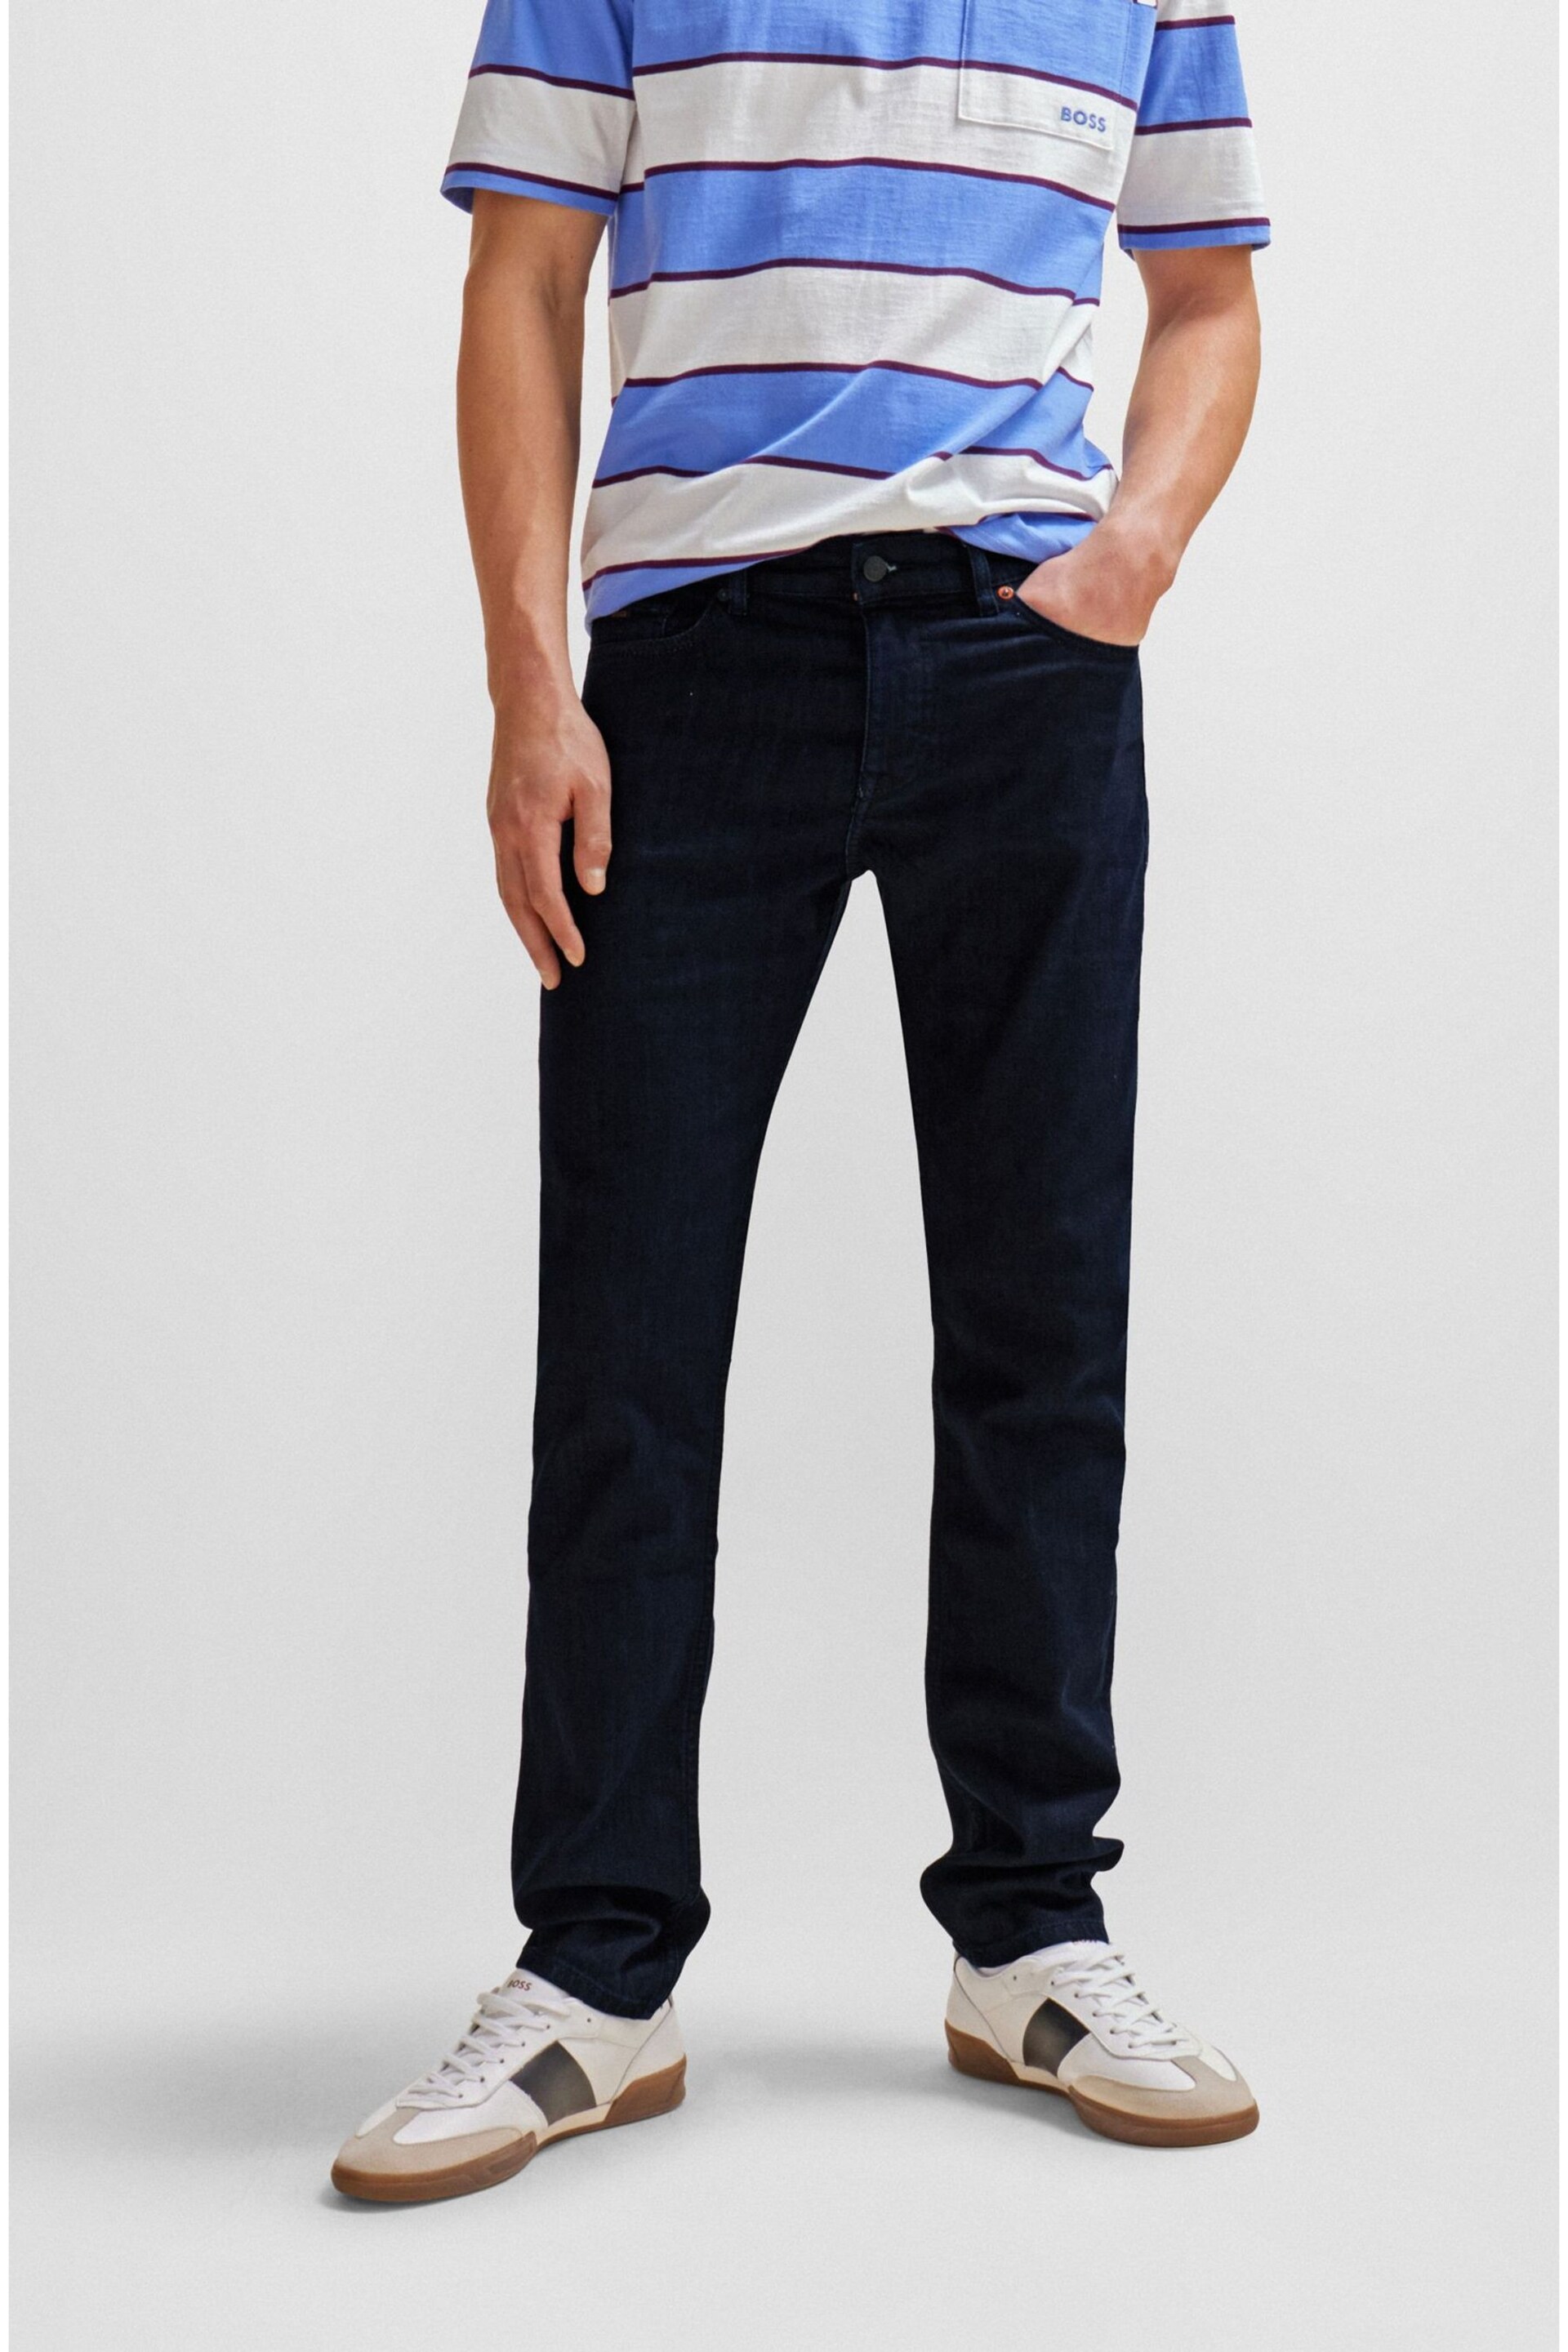 BOSS Dark Blue Delaware Slim Fit Stretch Jeans - Image 1 of 5